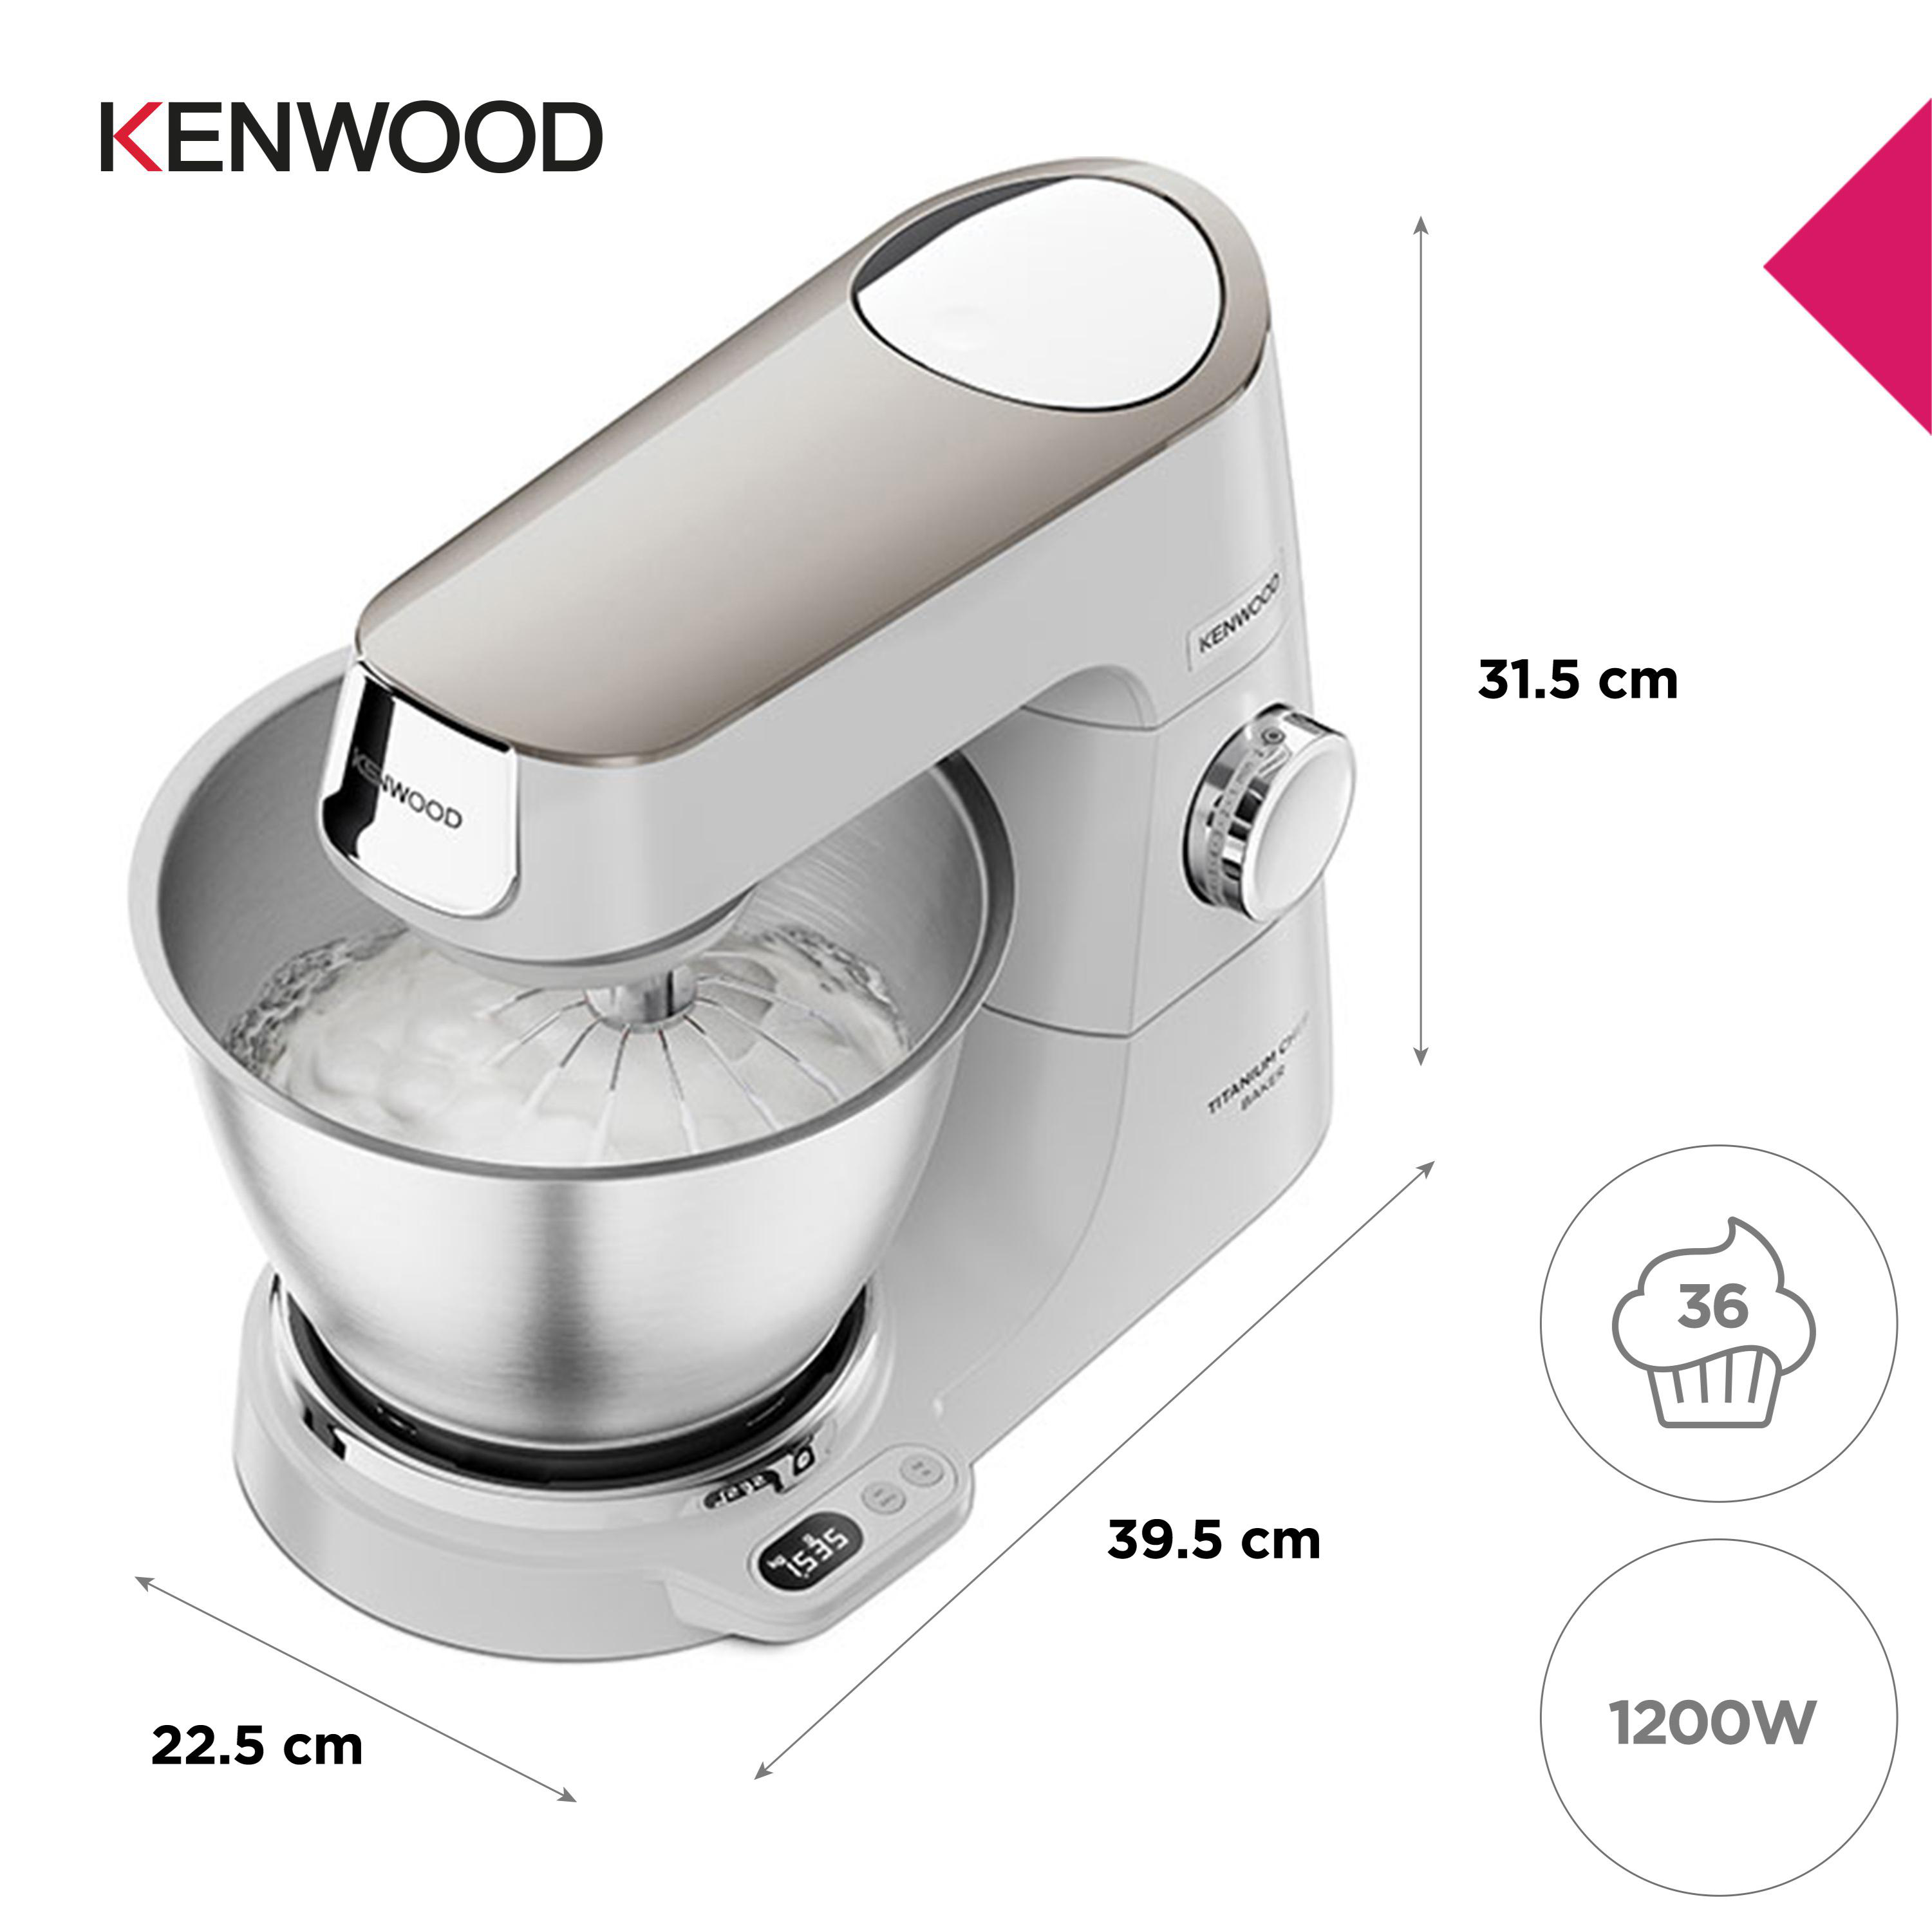 KENWOOD Titanium Chef Baker KVC65.001WH l, 5 Küchenmaschine 1200 Watt) Weiß (Rührschüsselkapazität